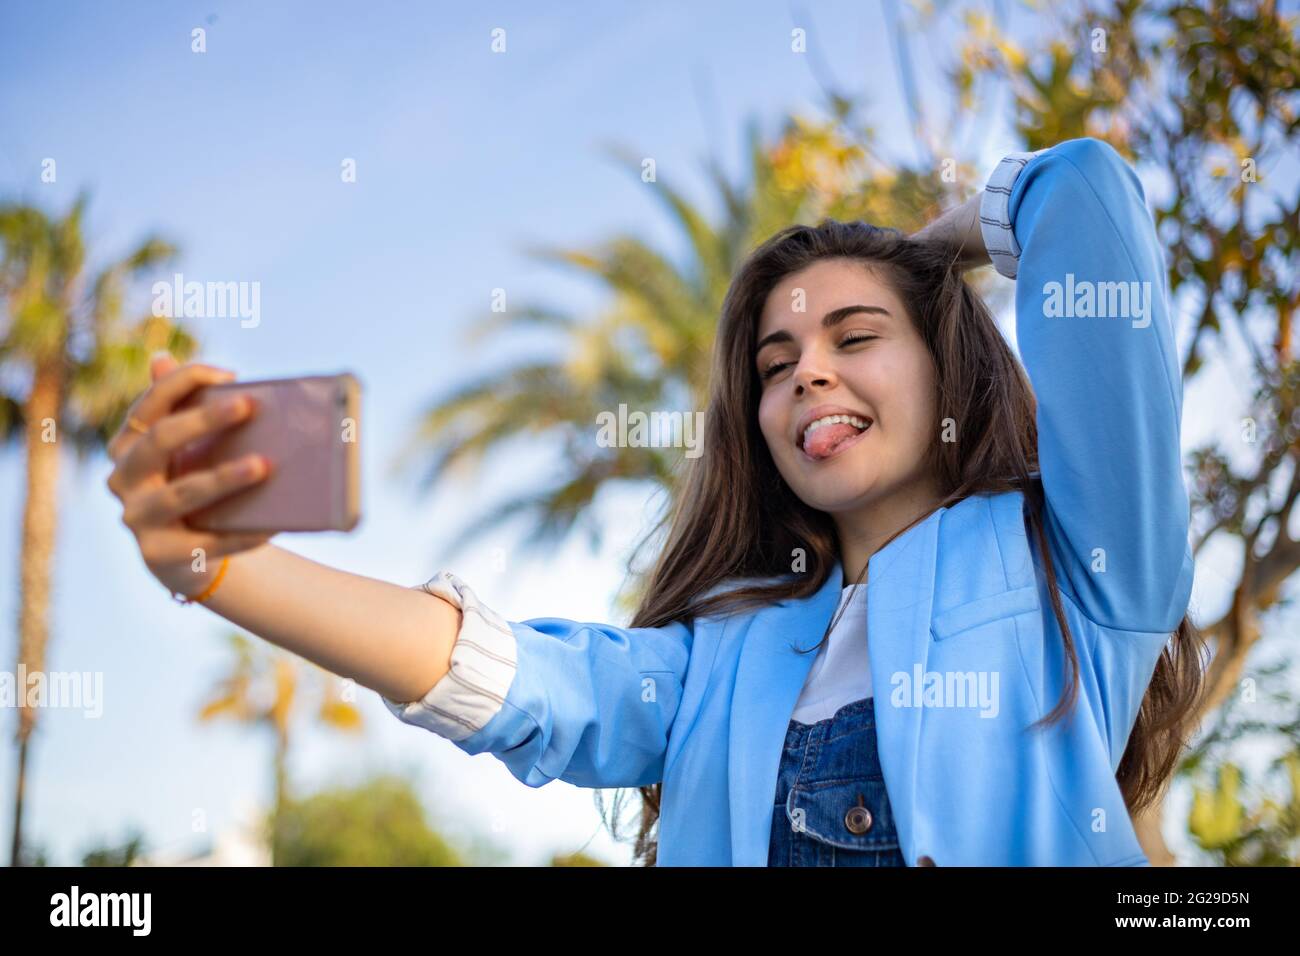 Student girl using technology at garden Stock Photo